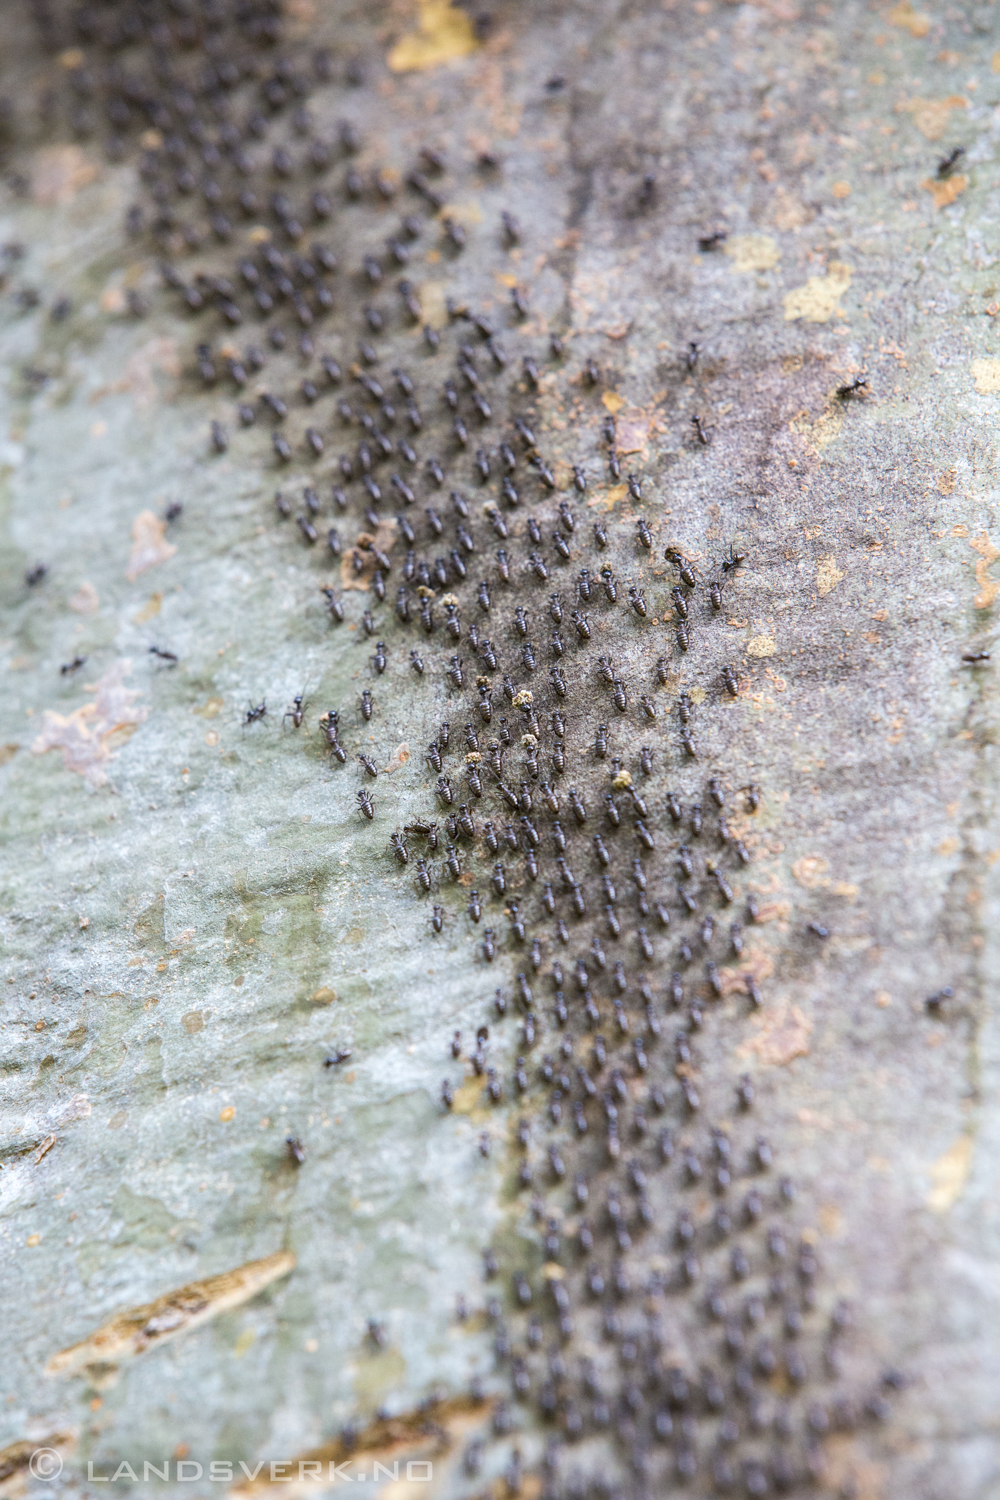 1 googol termites. Danum Valley, Borneo.

(Canon EOS 5D Mark III / Canon EF 70-200mm f/2.8 L IS II USM)